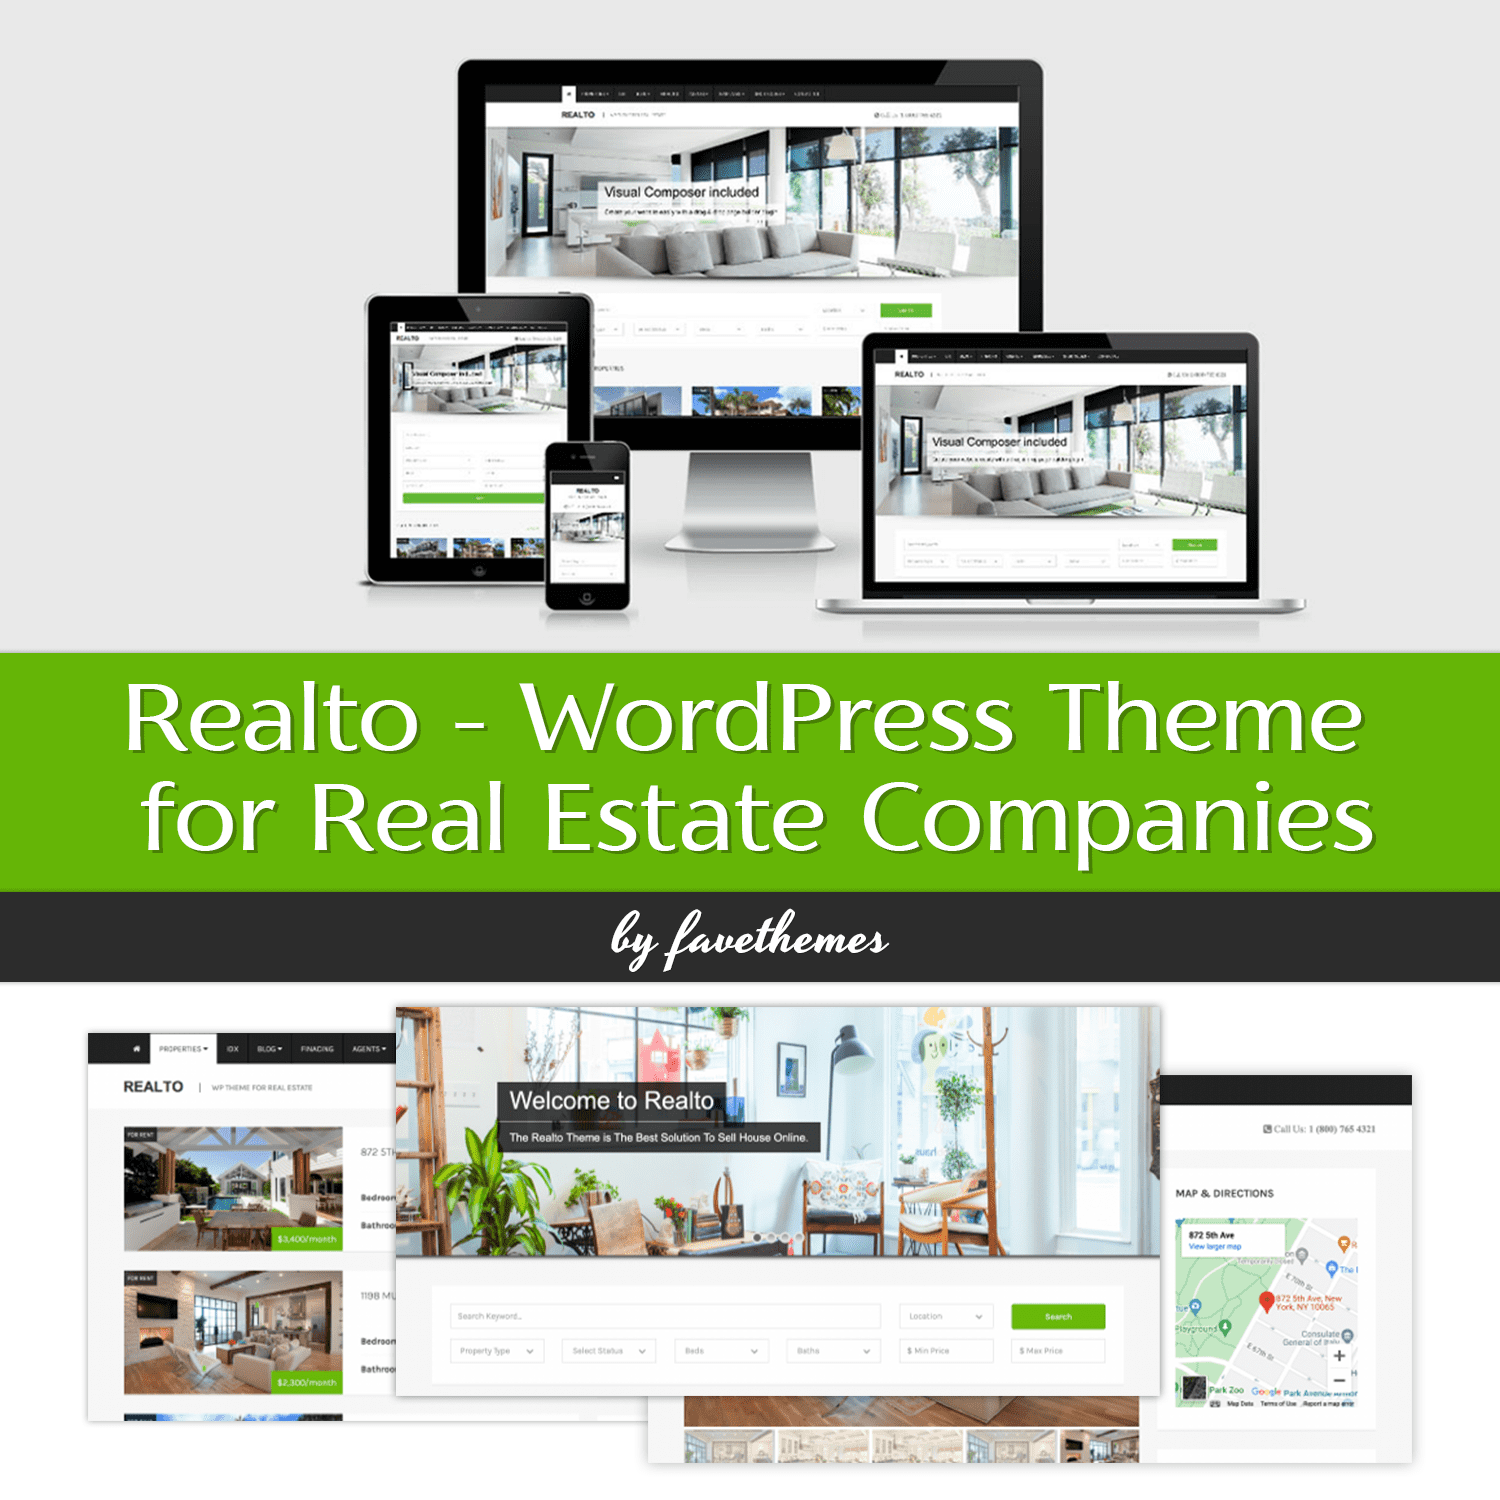 Realto - WordPress Theme for Real Estate Companies cover.